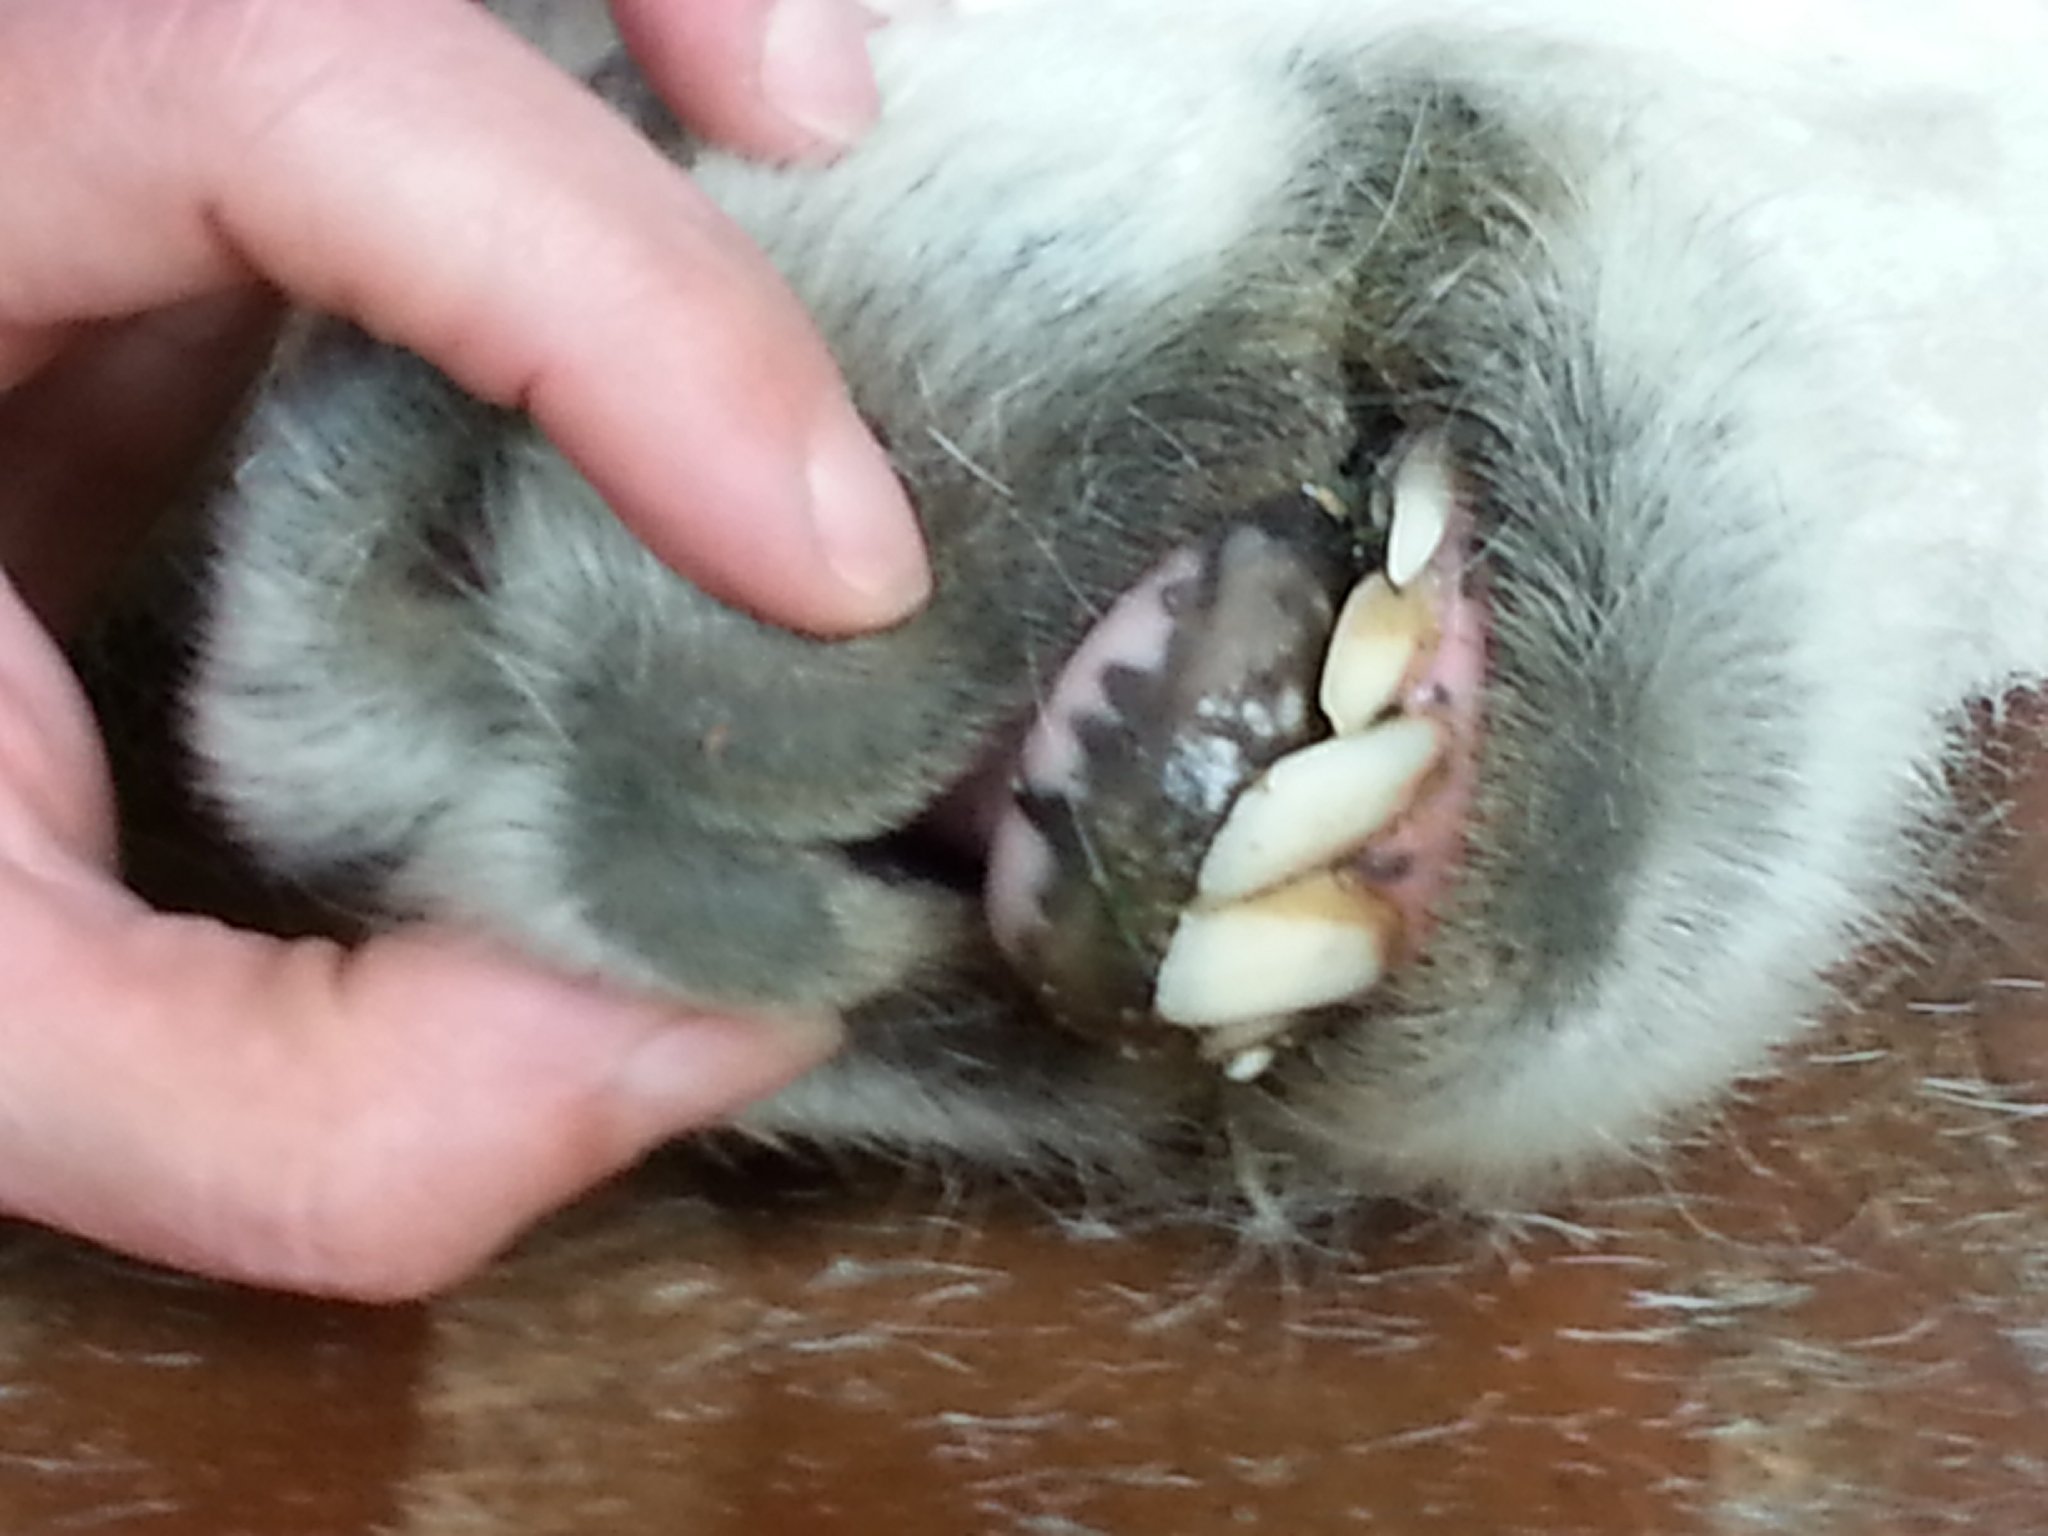 Cleo's teeth